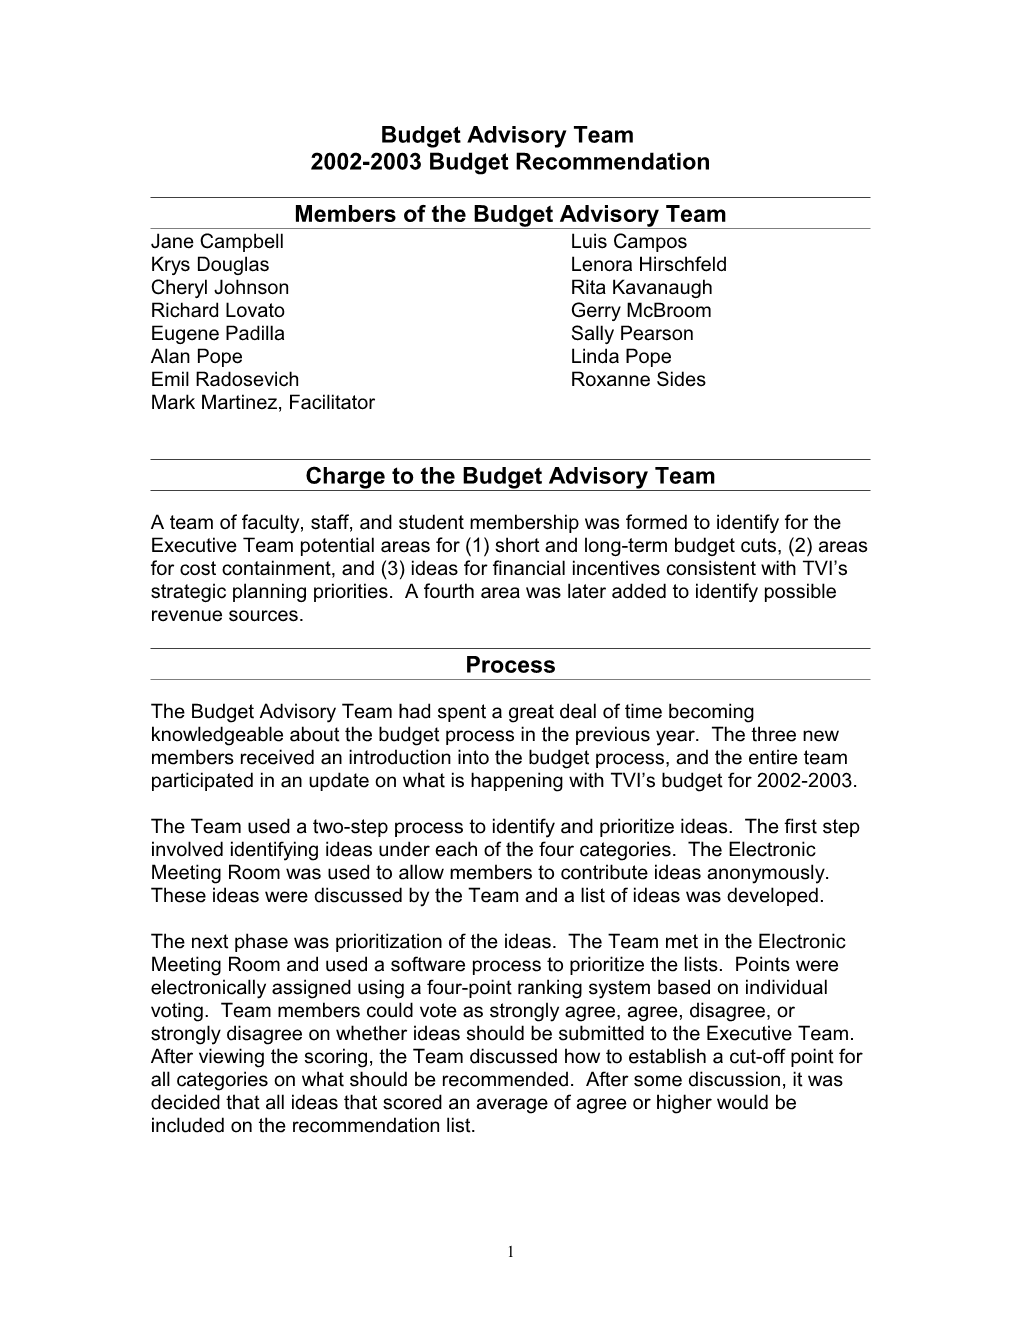 Budget Advisory Group